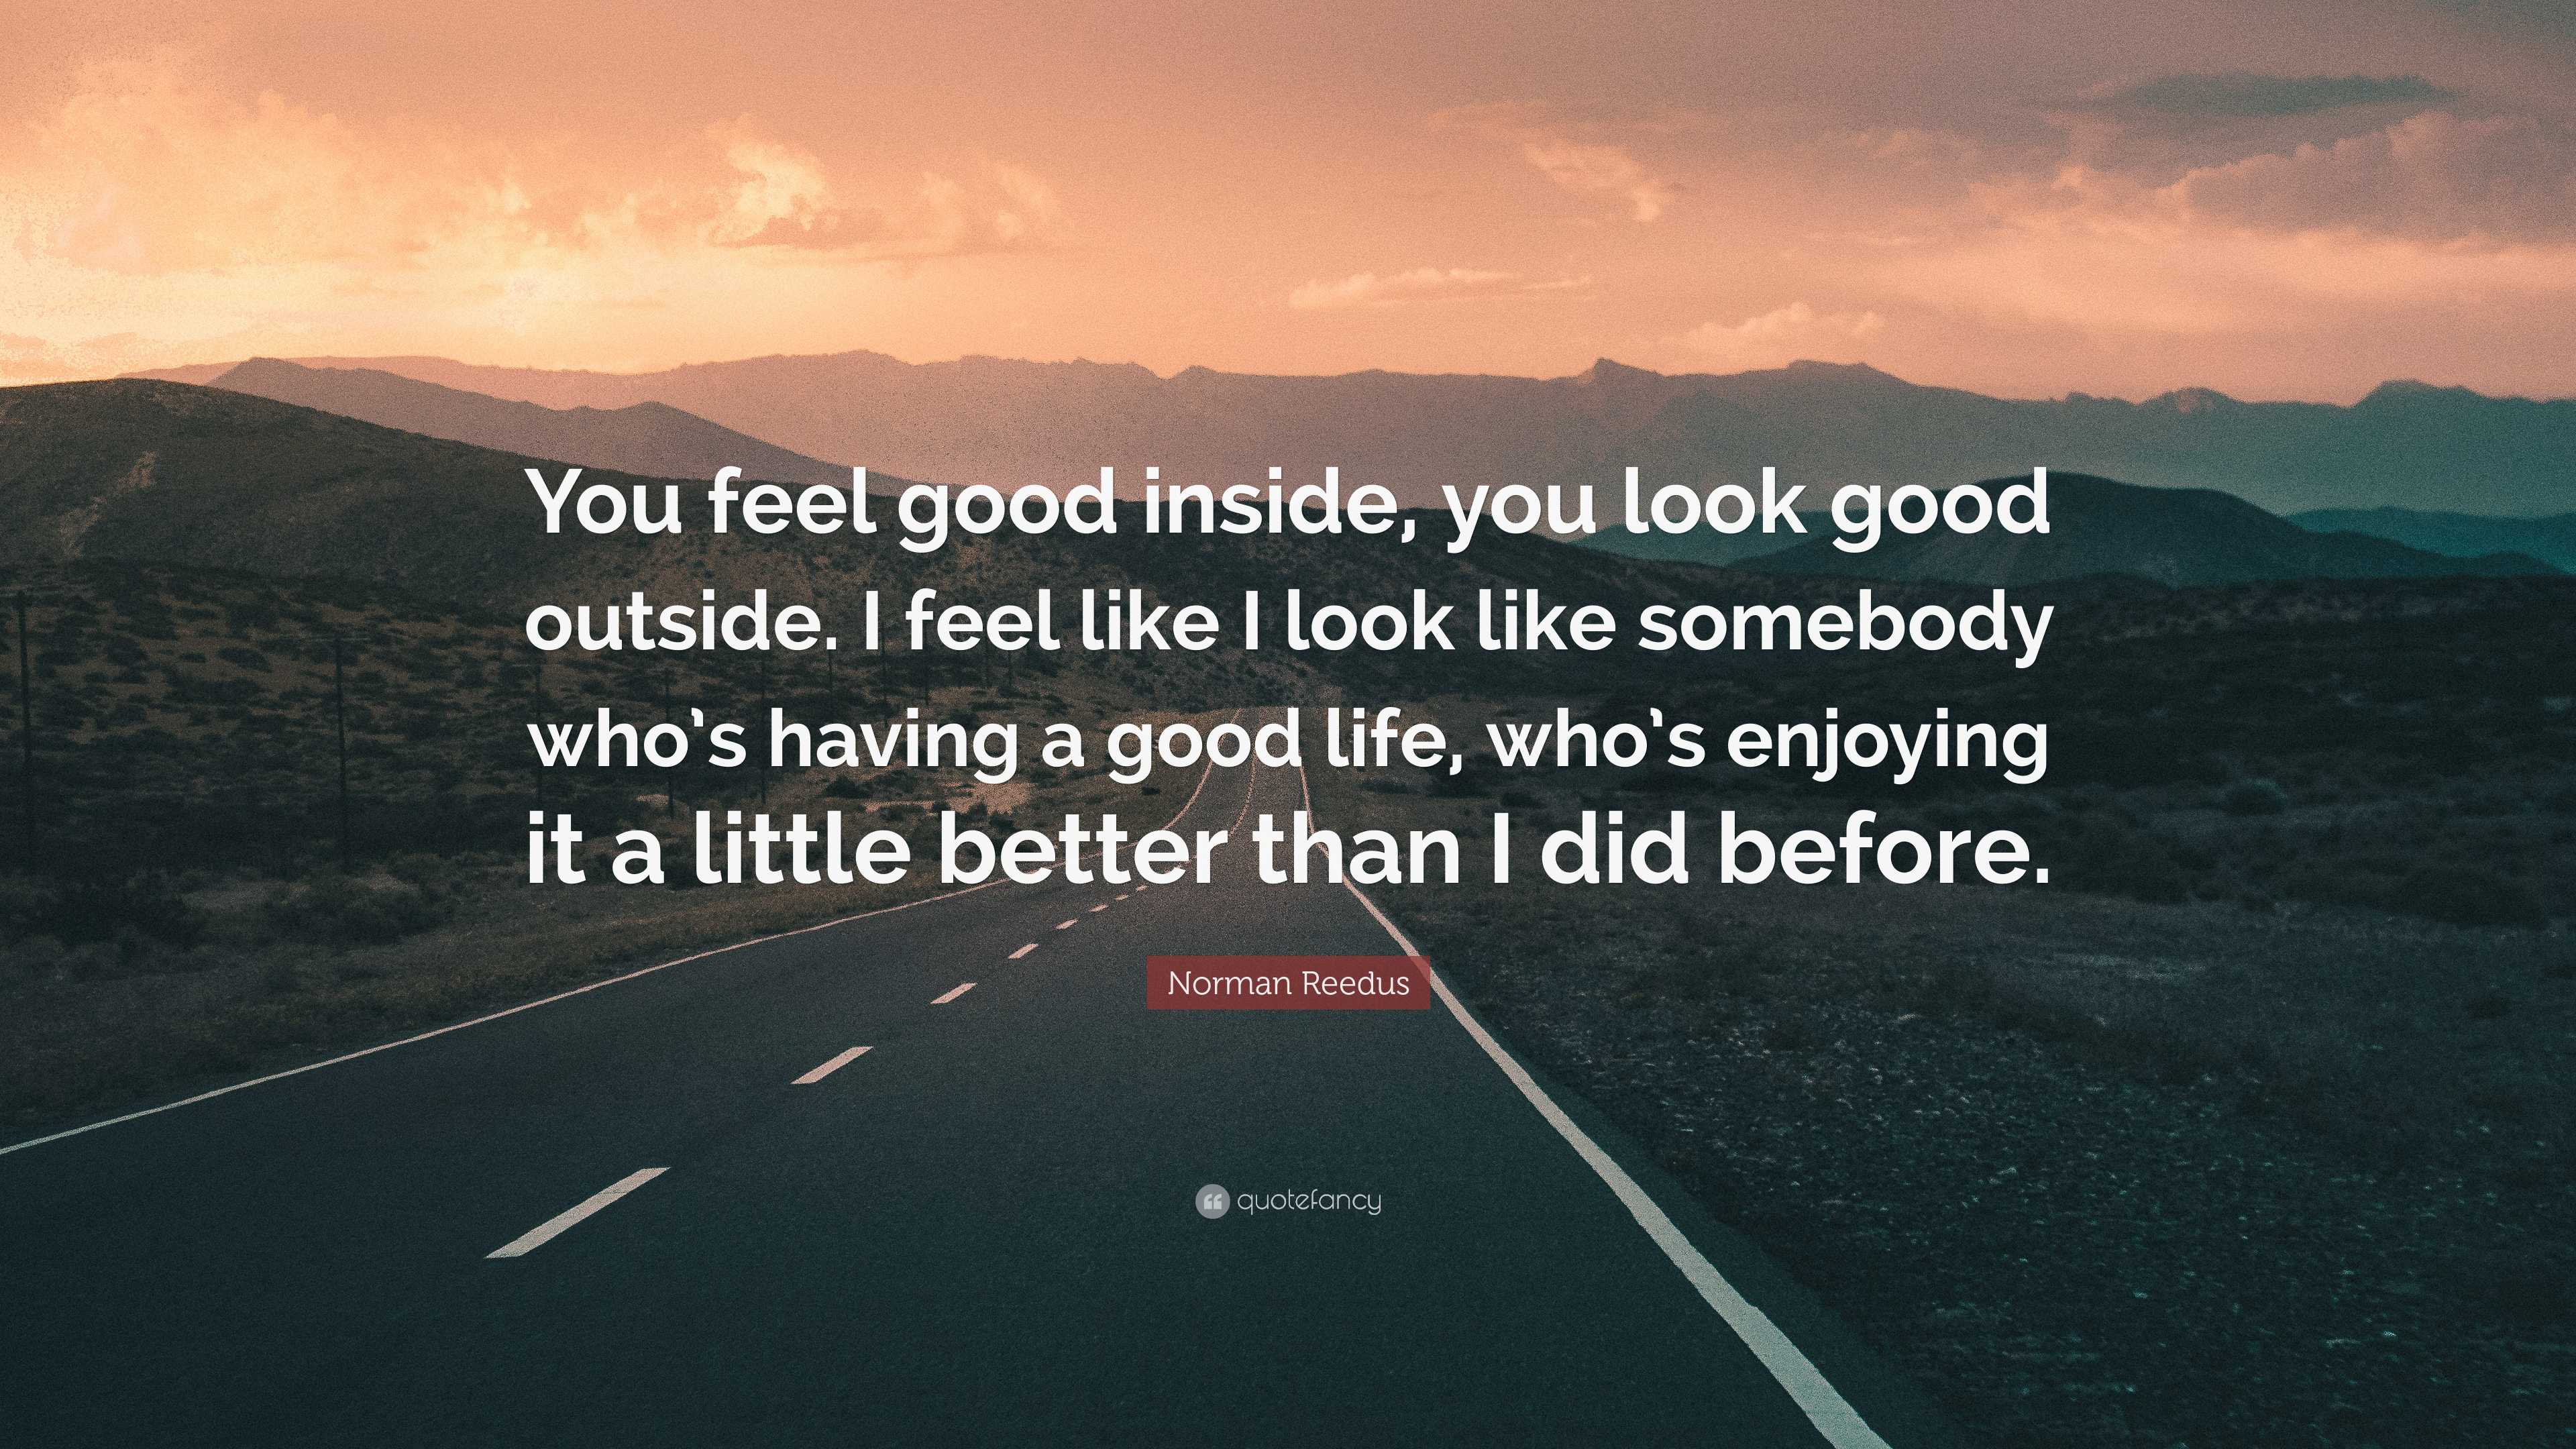 Norman Reedus Quote: “You feel good inside, you look good outside. I feel  like I look like somebody who's having a good life, who's enjoying i”